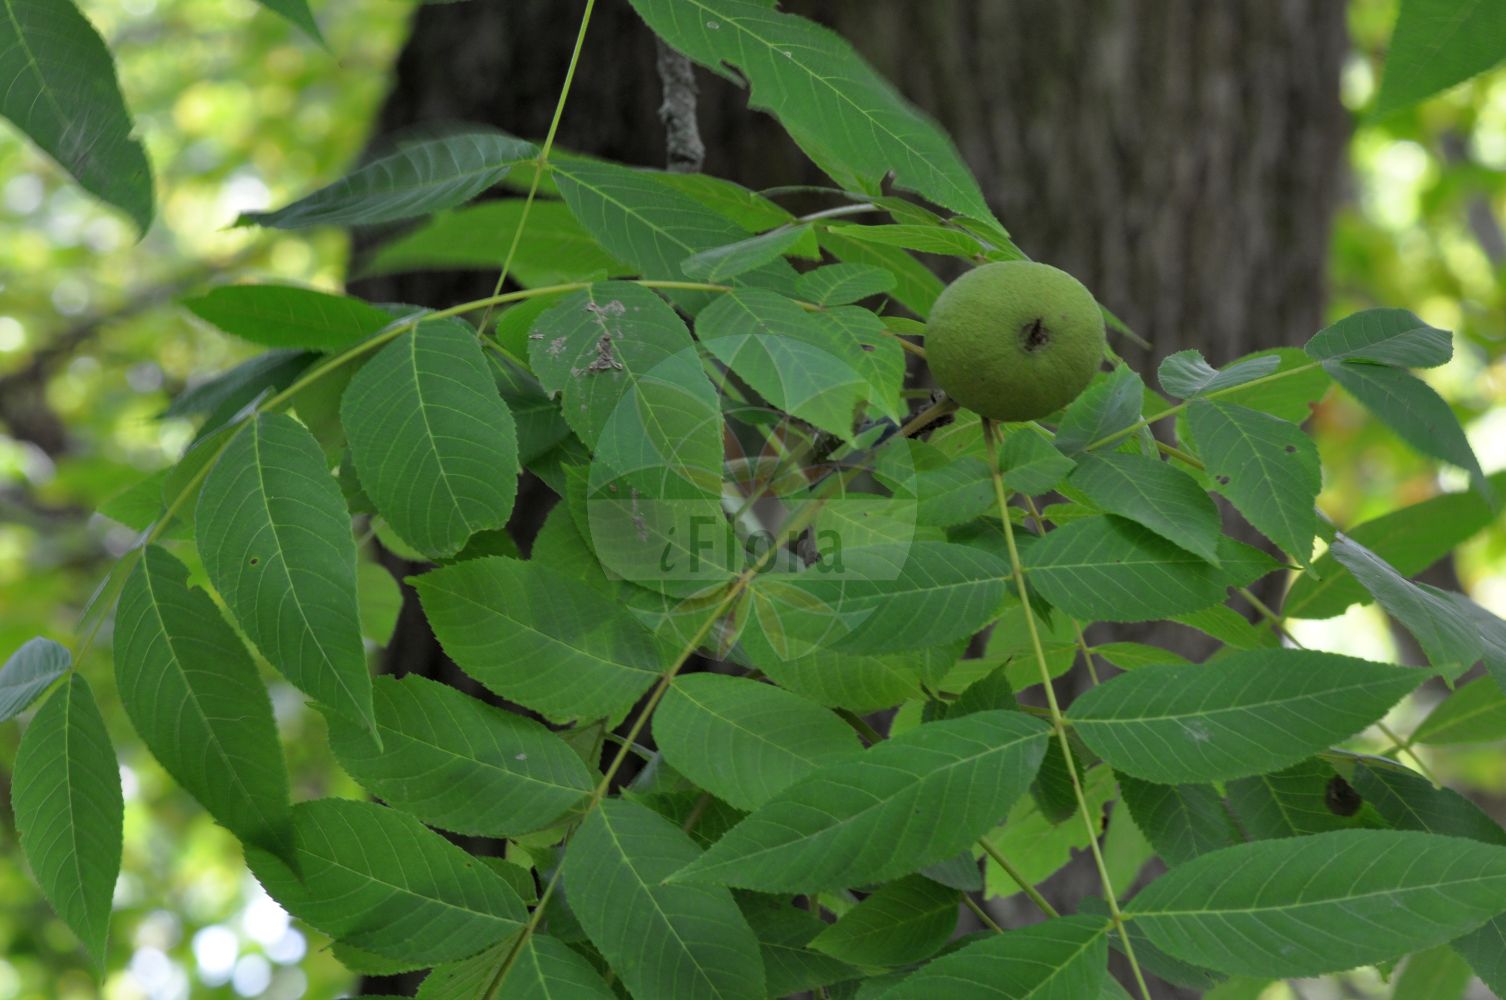 Foto von Juglans nigra (Schwarze Walnuss - Black Walnut). ---- Photo of Juglans nigra (Schwarze Walnuss - Black Walnut).(Juglans nigra,Schwarze Walnuss,Black Walnut,Juglans nigra,Schwarze Walnuss,Black Walnut,American Walnut,English Walnut,Juglans,Walnuß,Walnut,Juglandaceae,Walnussbaumgewächse,Walnut family)